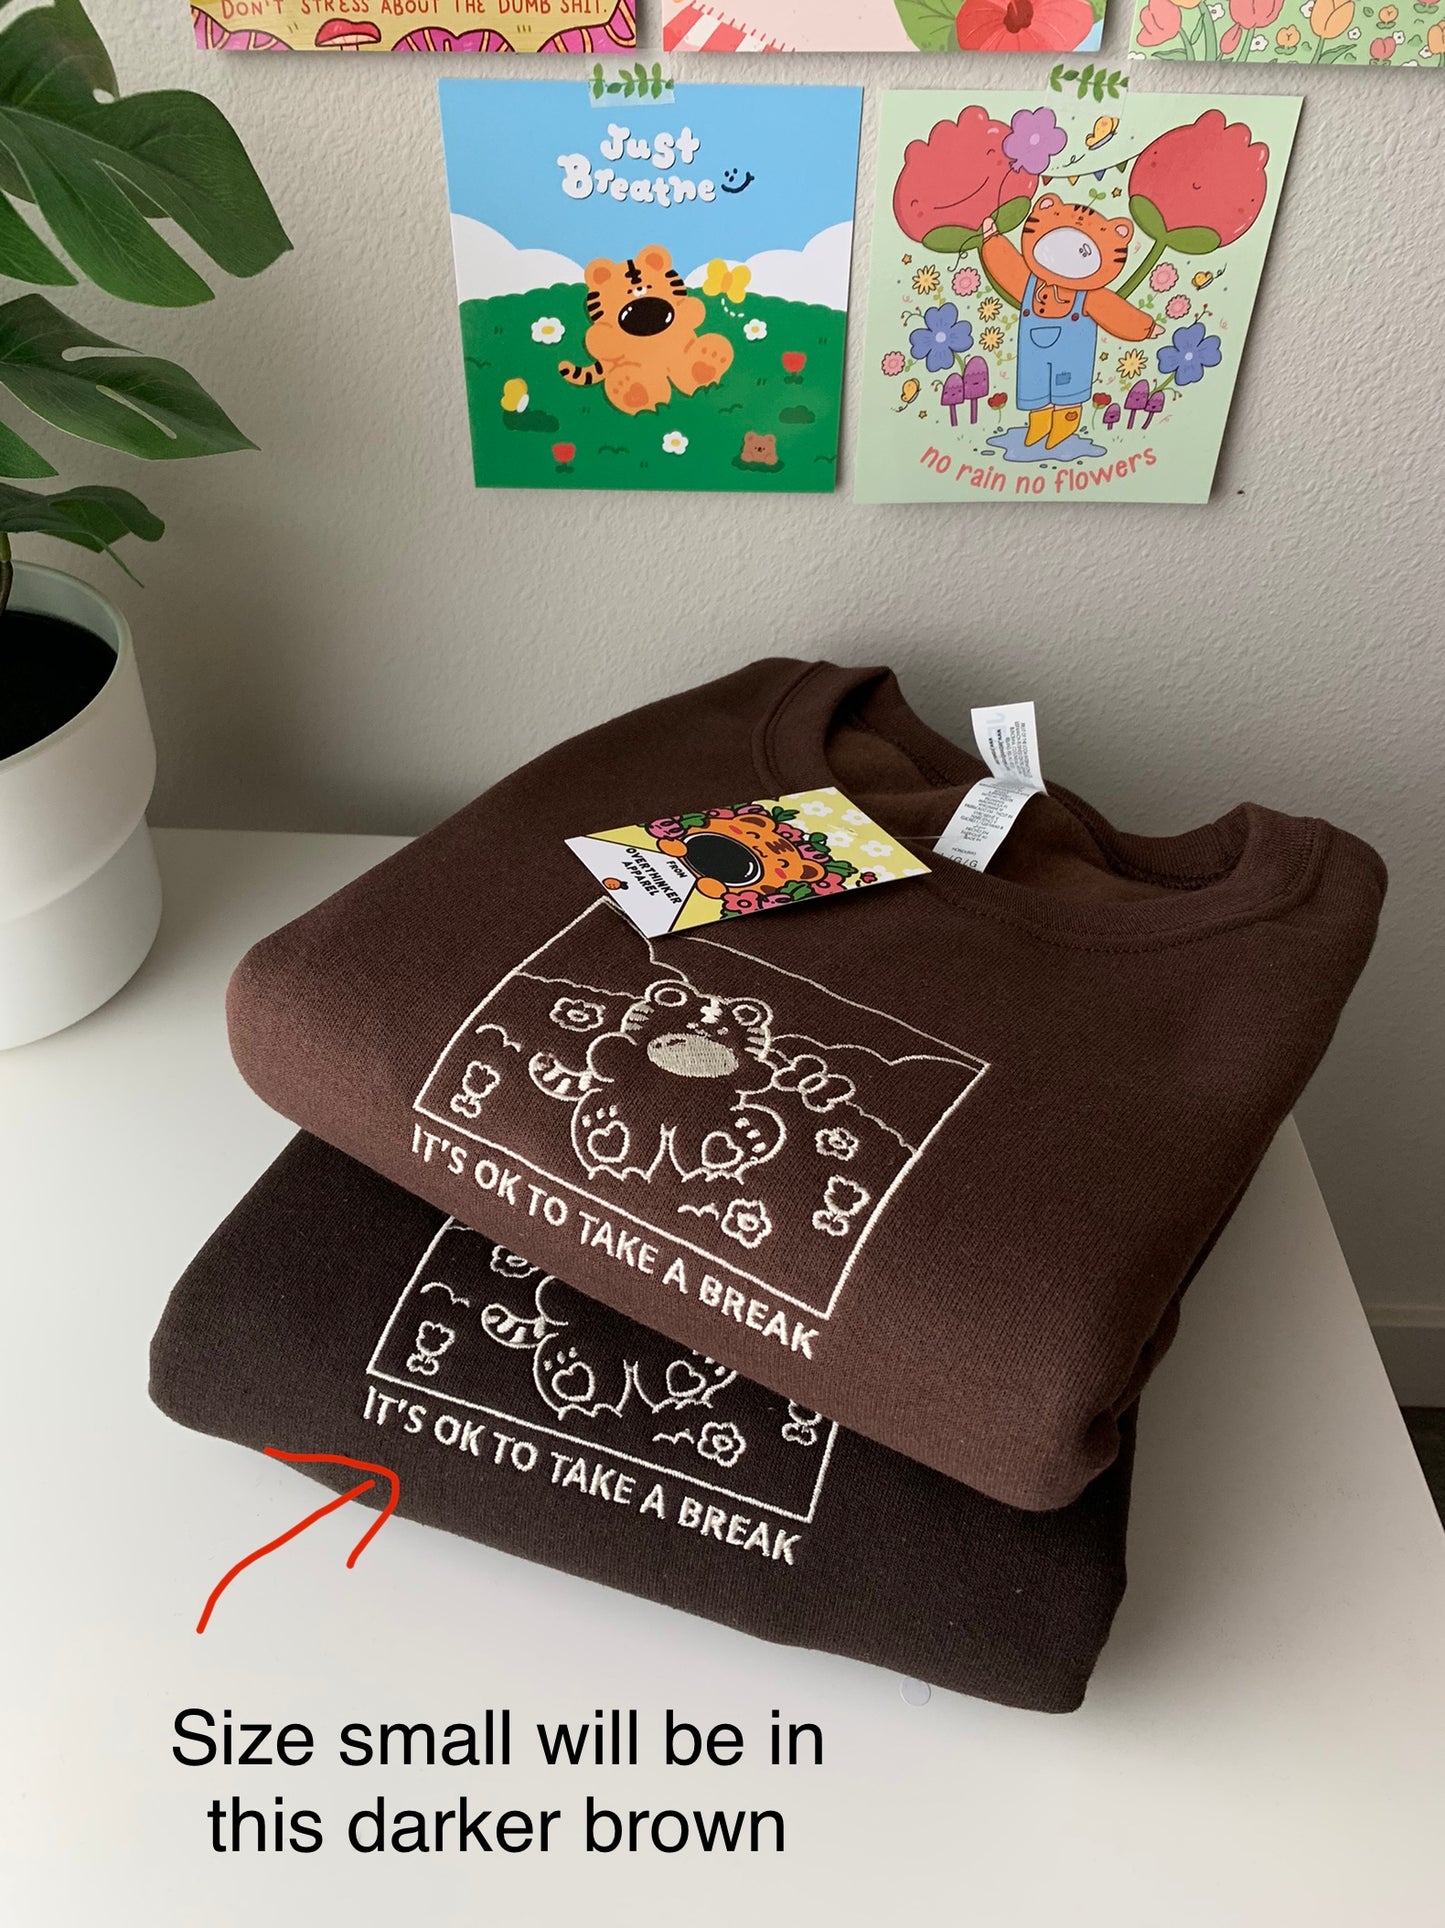 IT'S OK TO TAKE A BREAK Embroidered Crewneck Sweatshirt